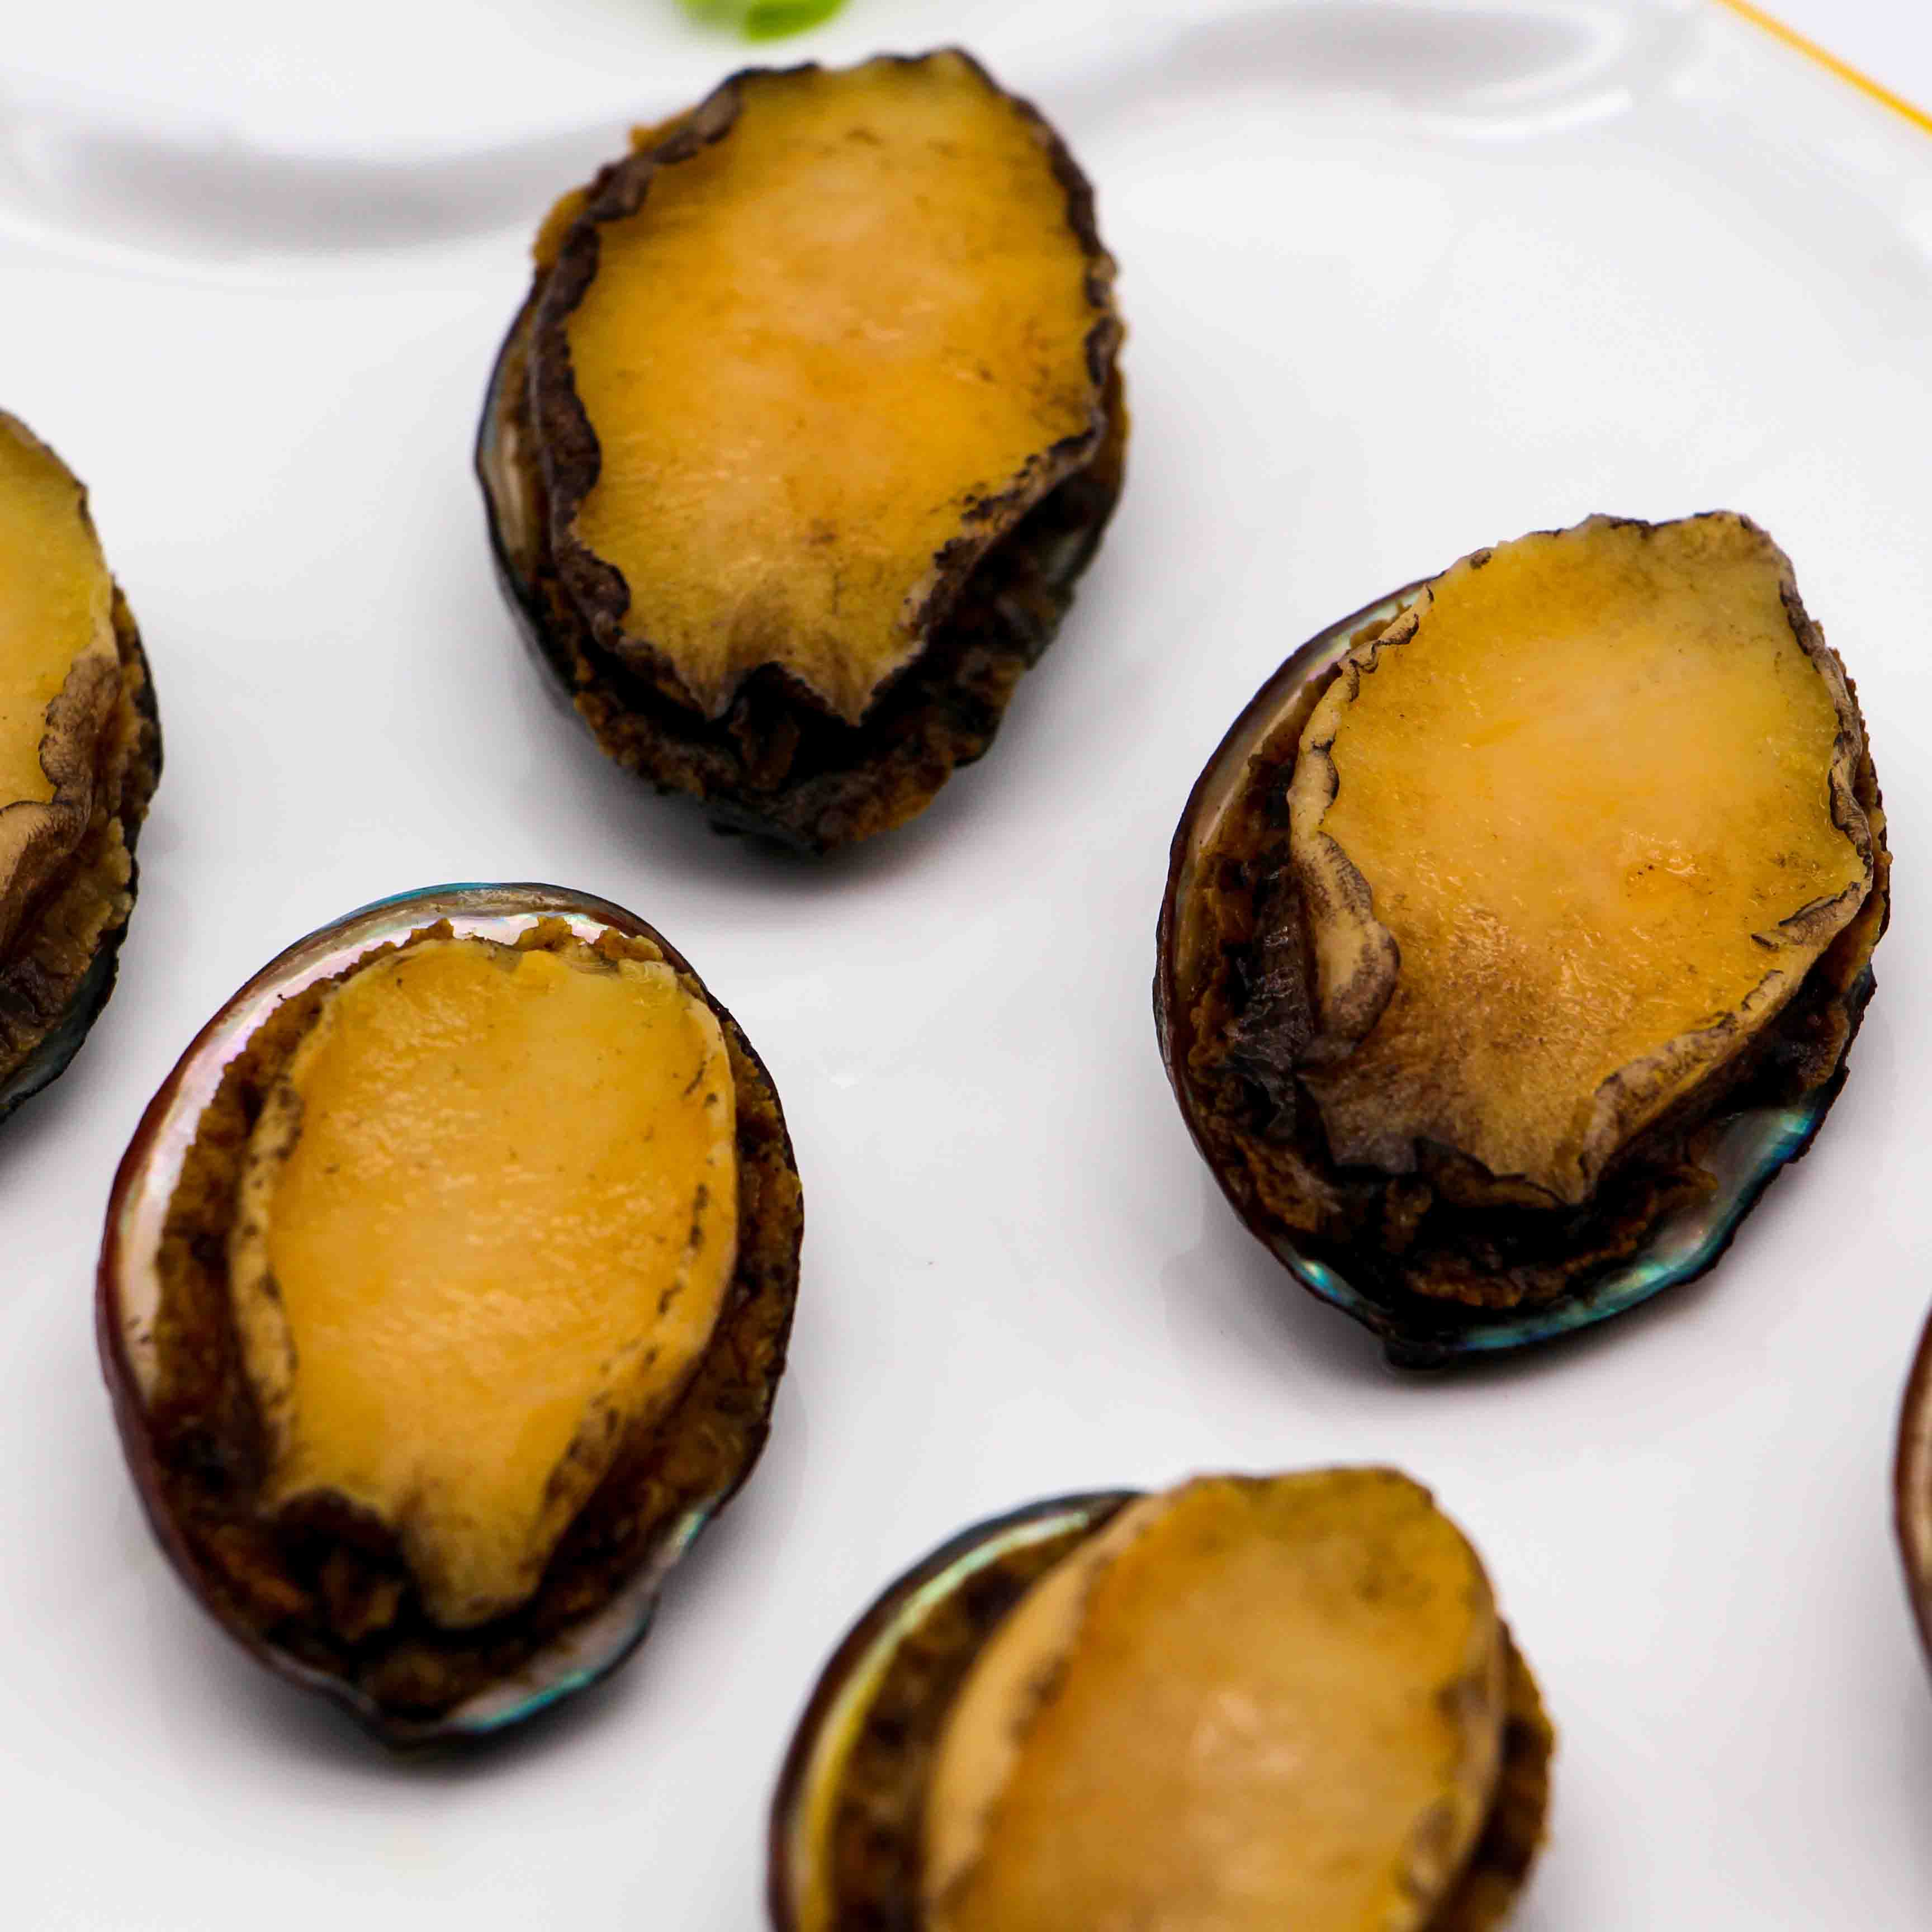 Frutti di mare di abalone bolliti congelati, sgusciati e rimossi i visceri